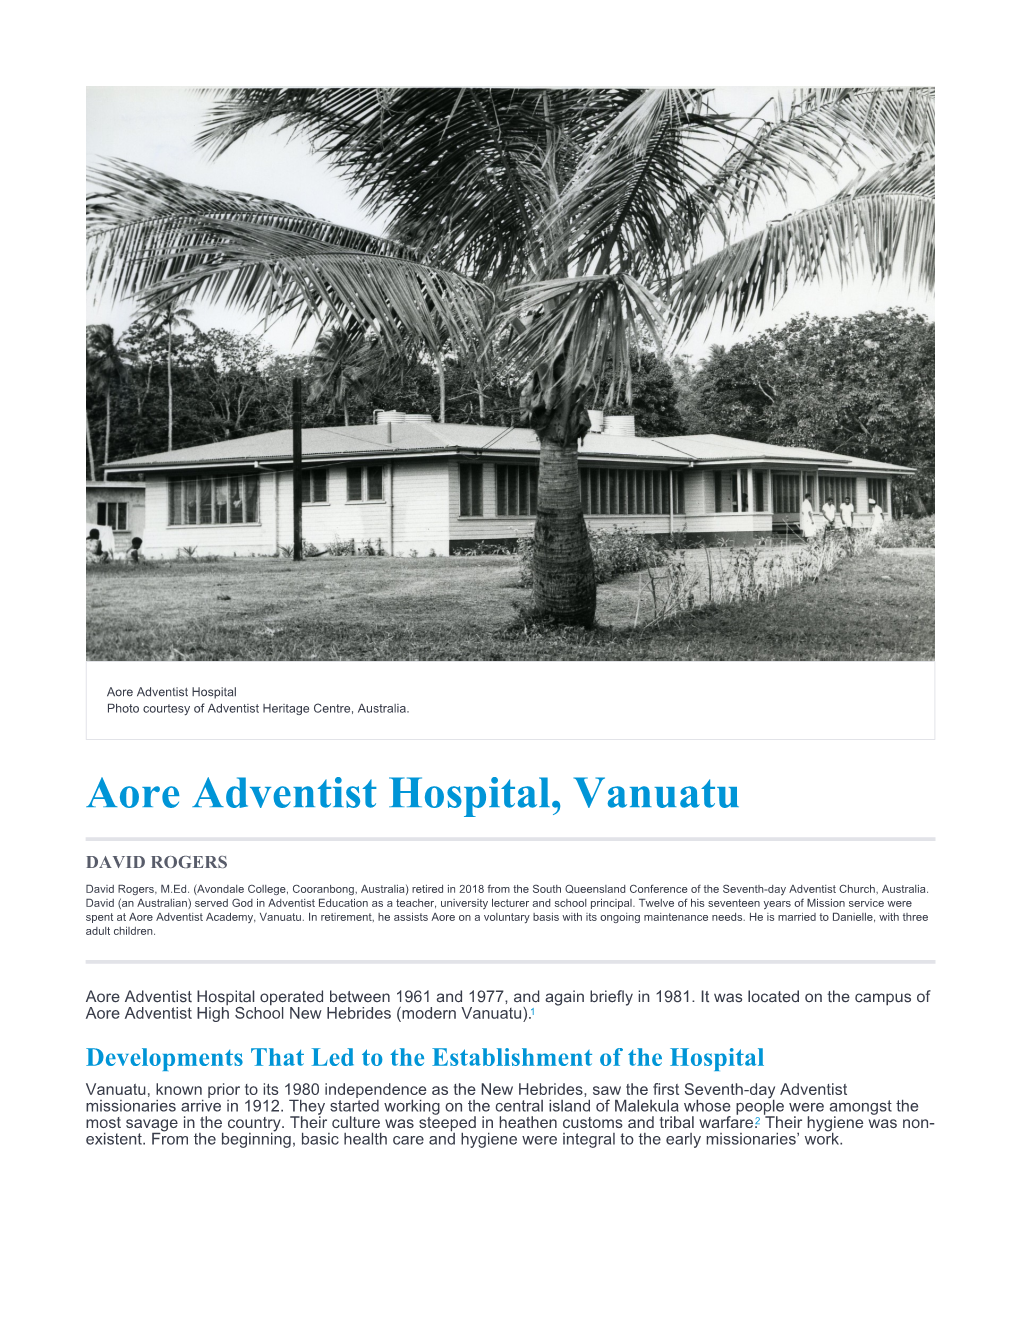 Aore Adventist Hospital, Vanuatu